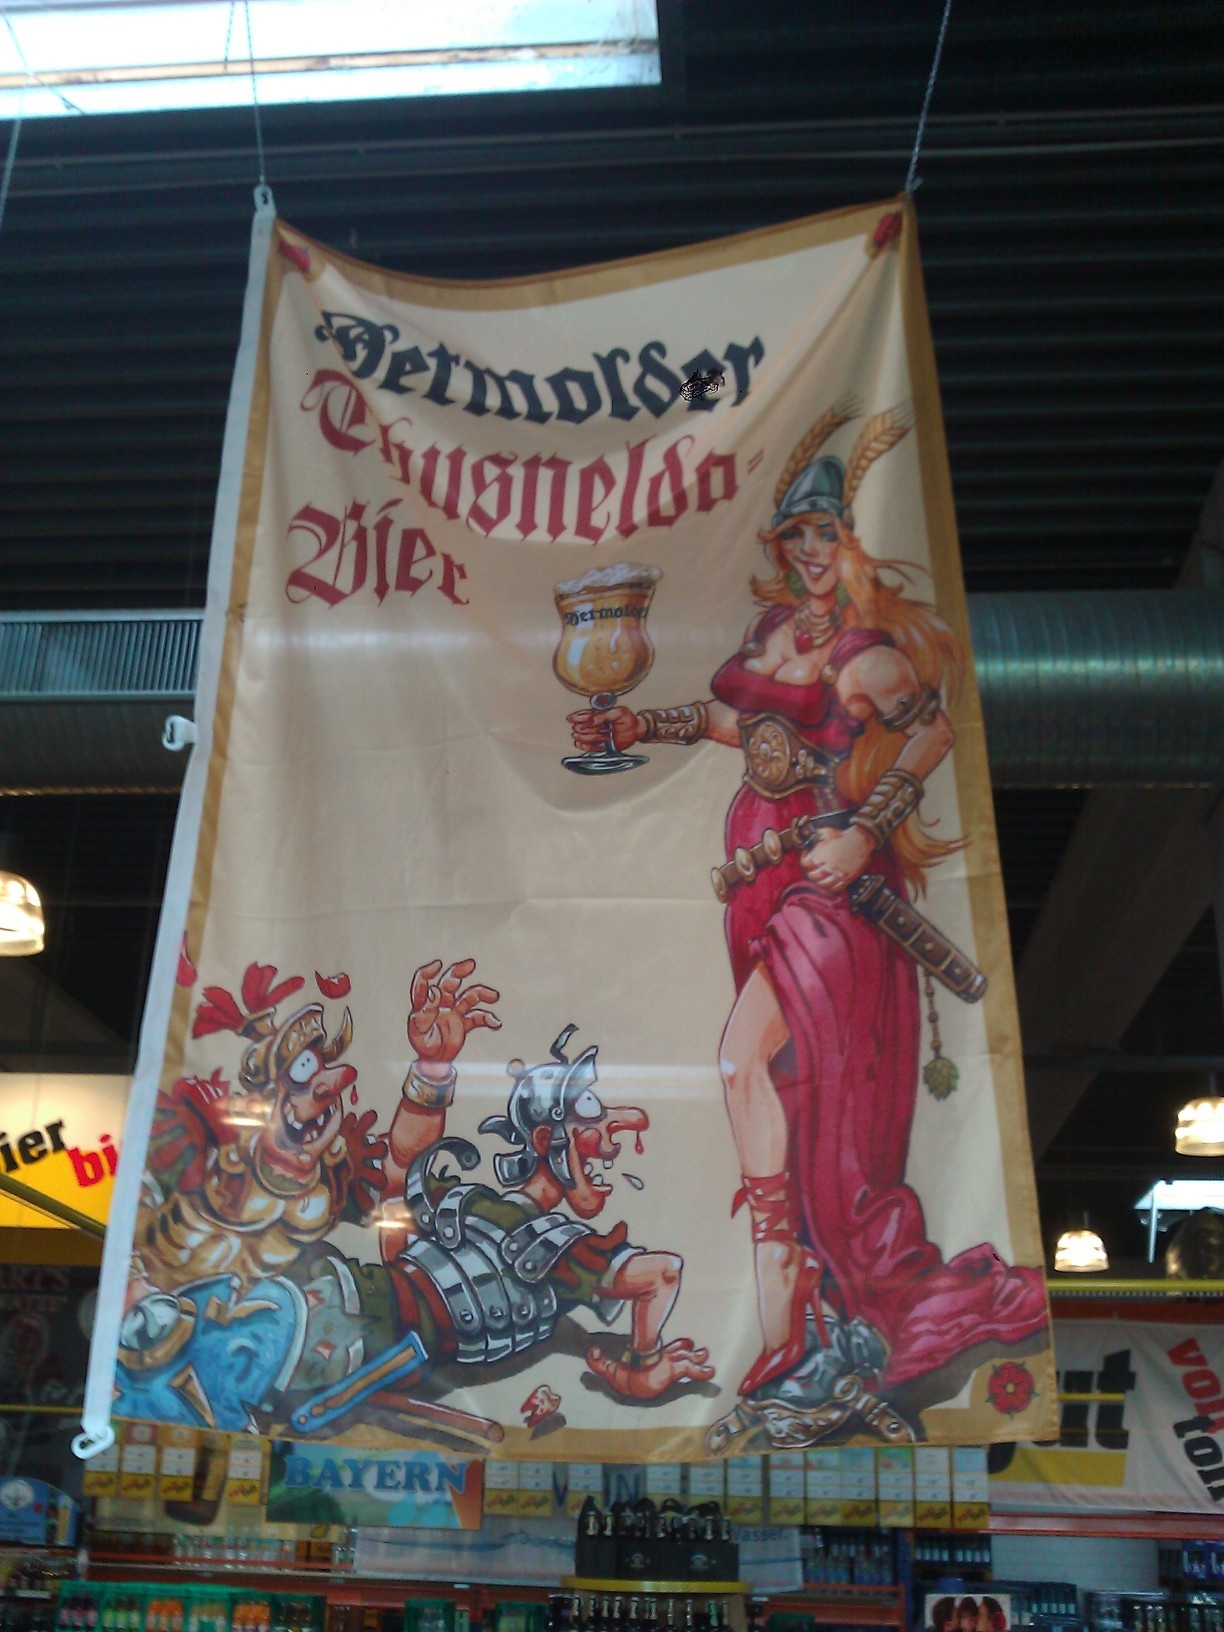 Beer advertisment level German!